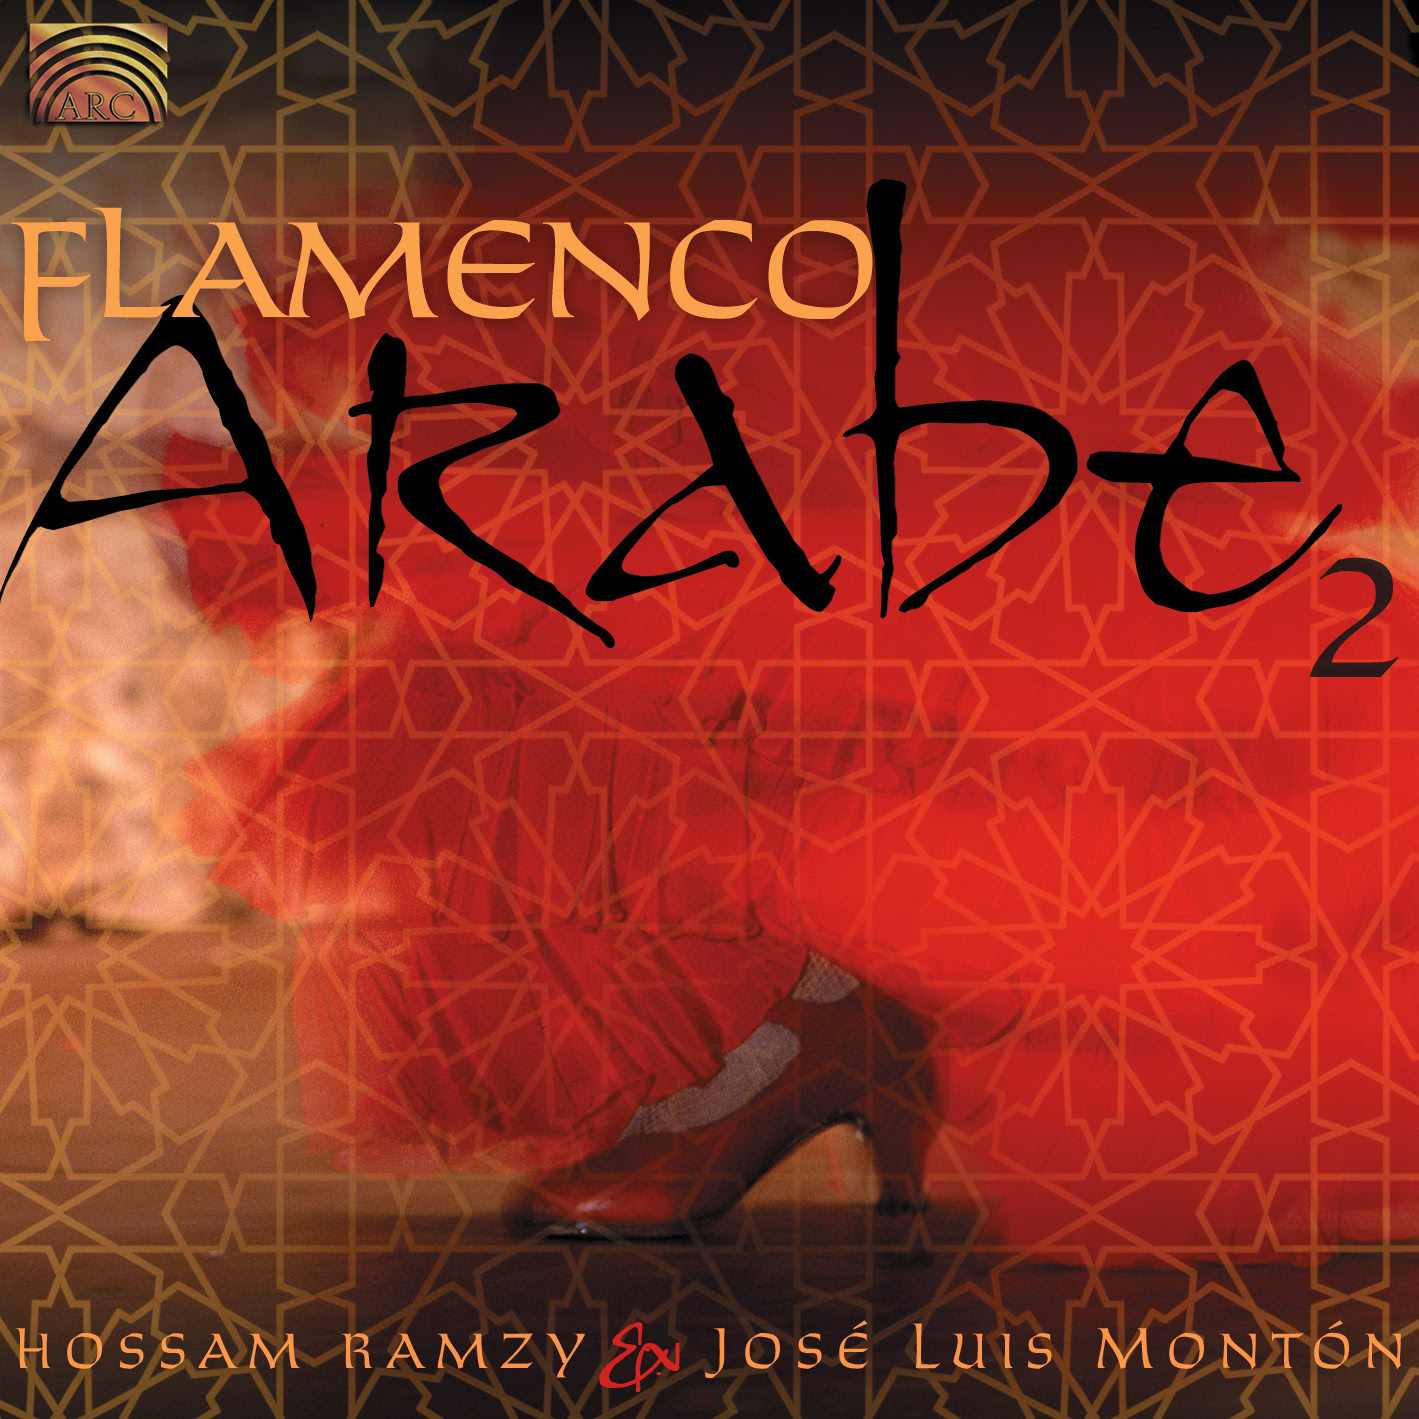 EUCD2000 Flamenco Arabe 2